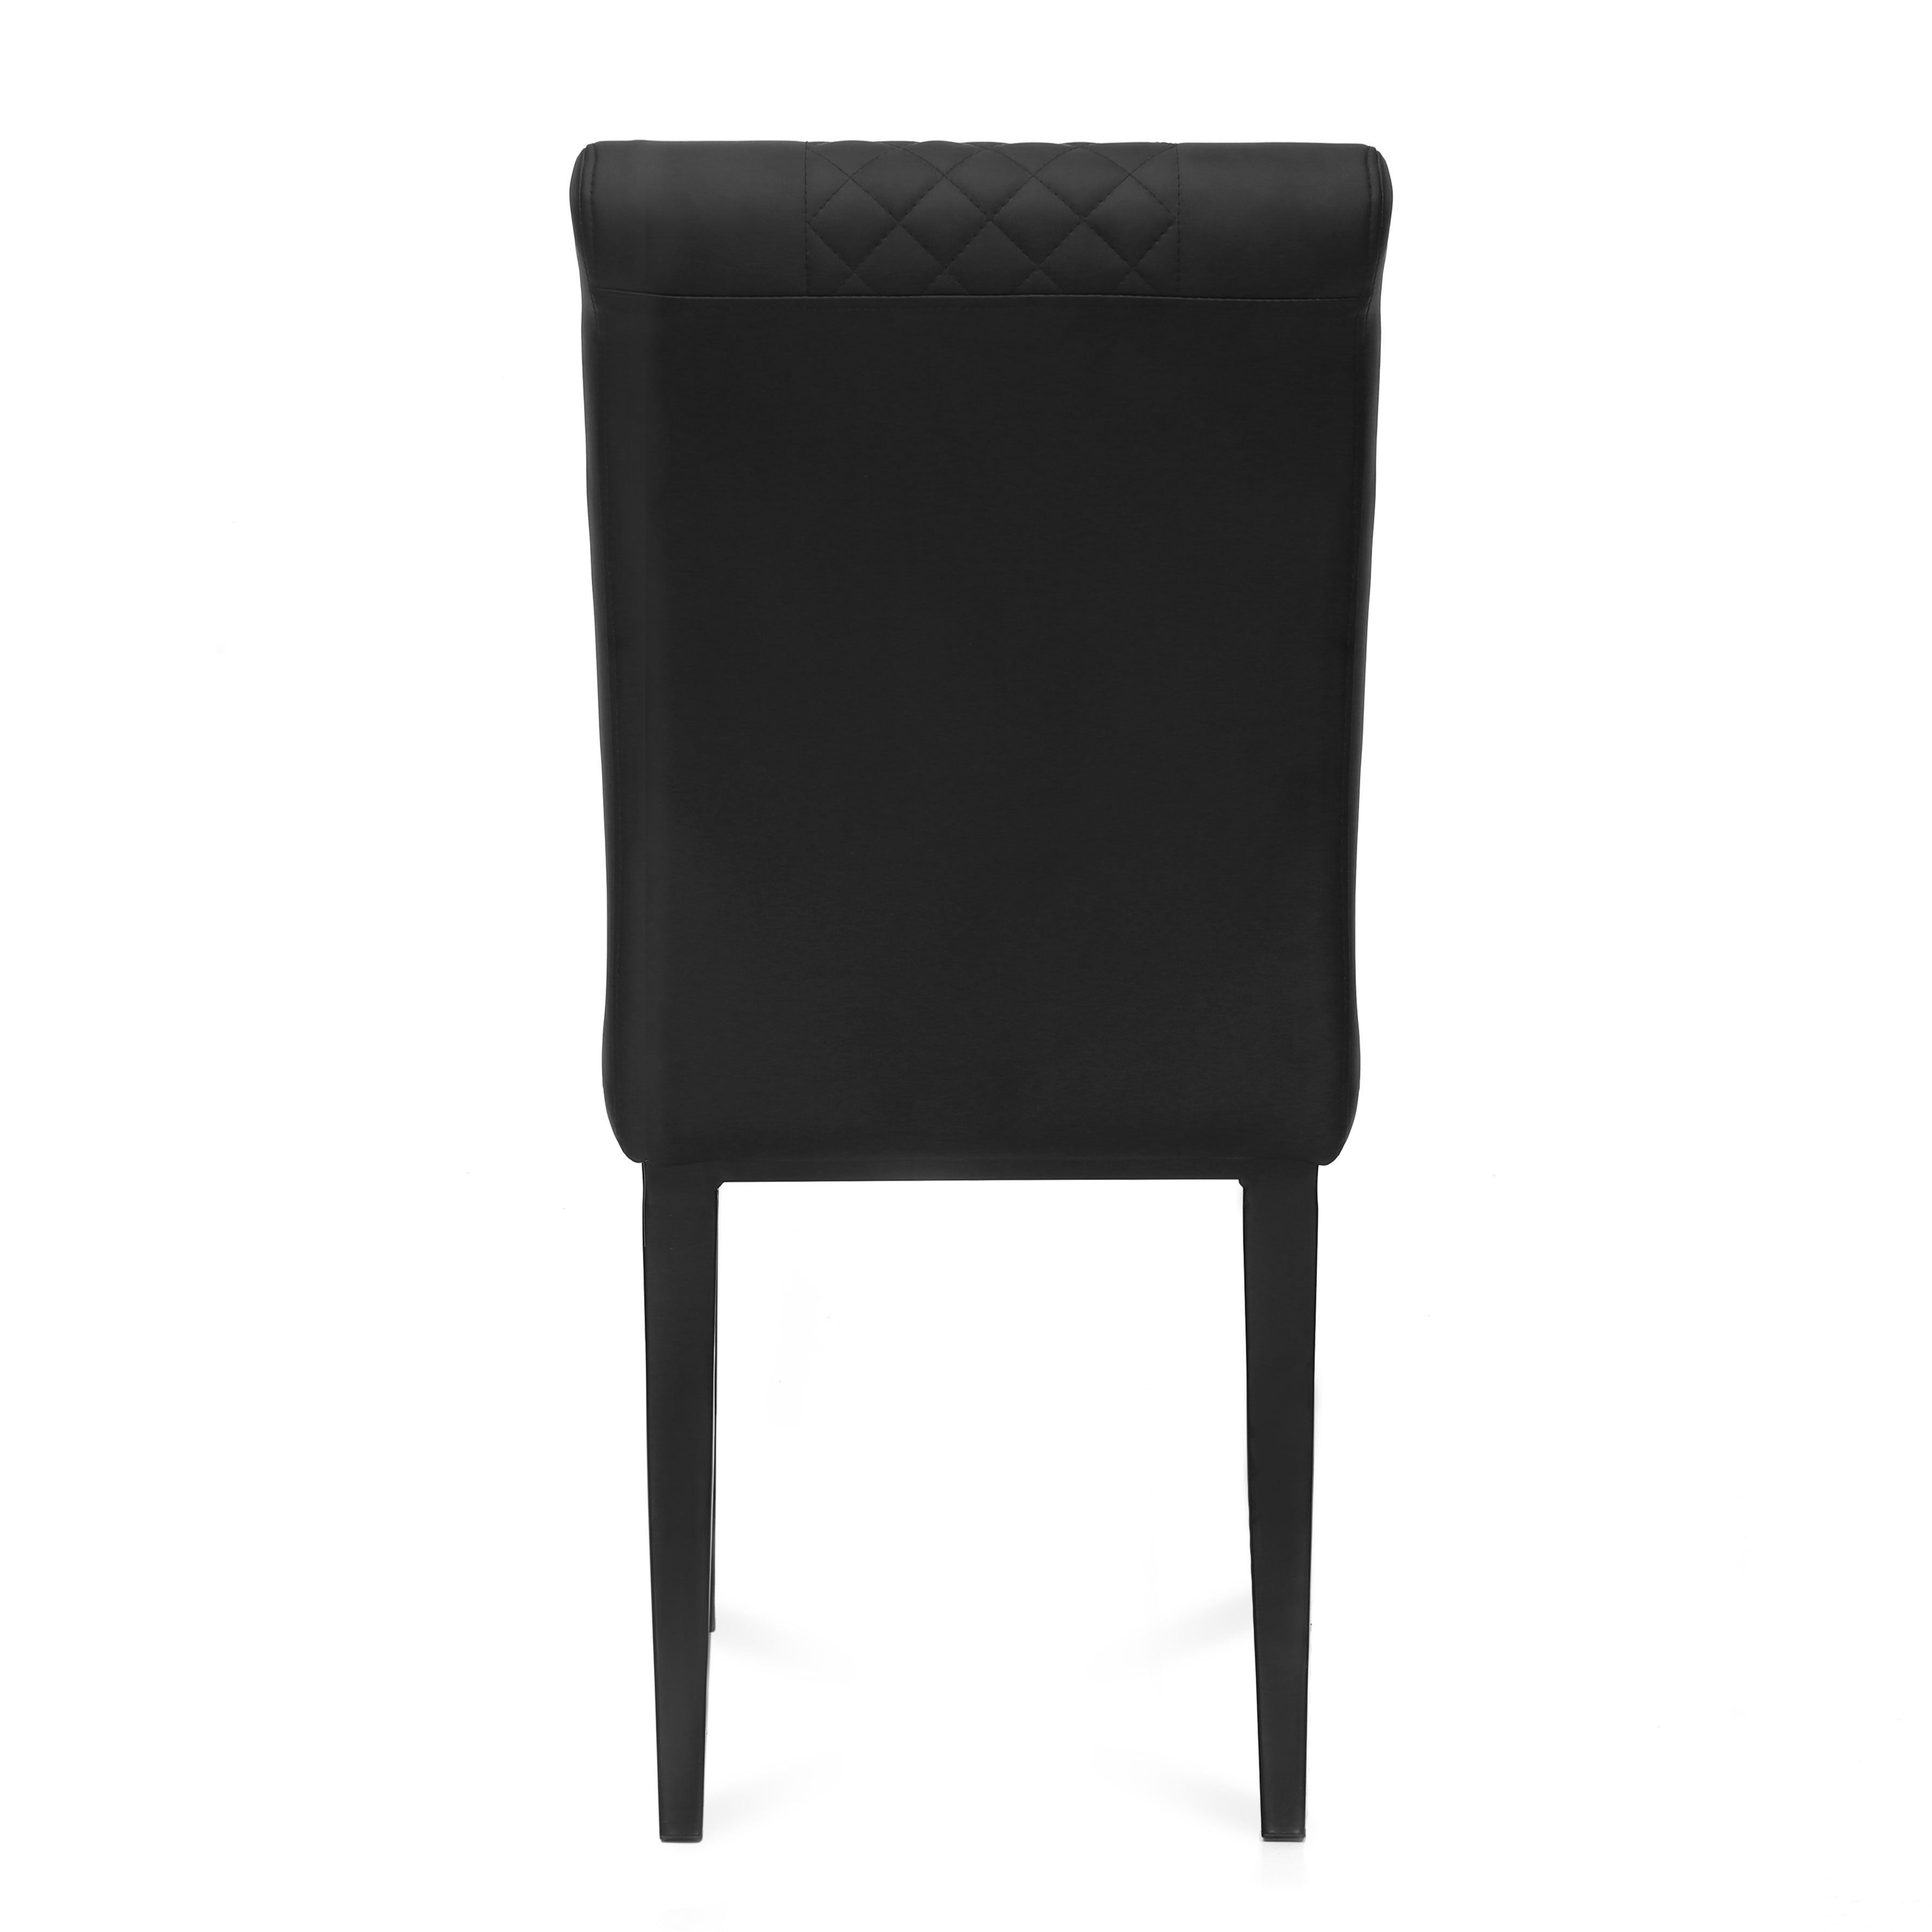 Mickle 6 Seater Dining Set (Black)